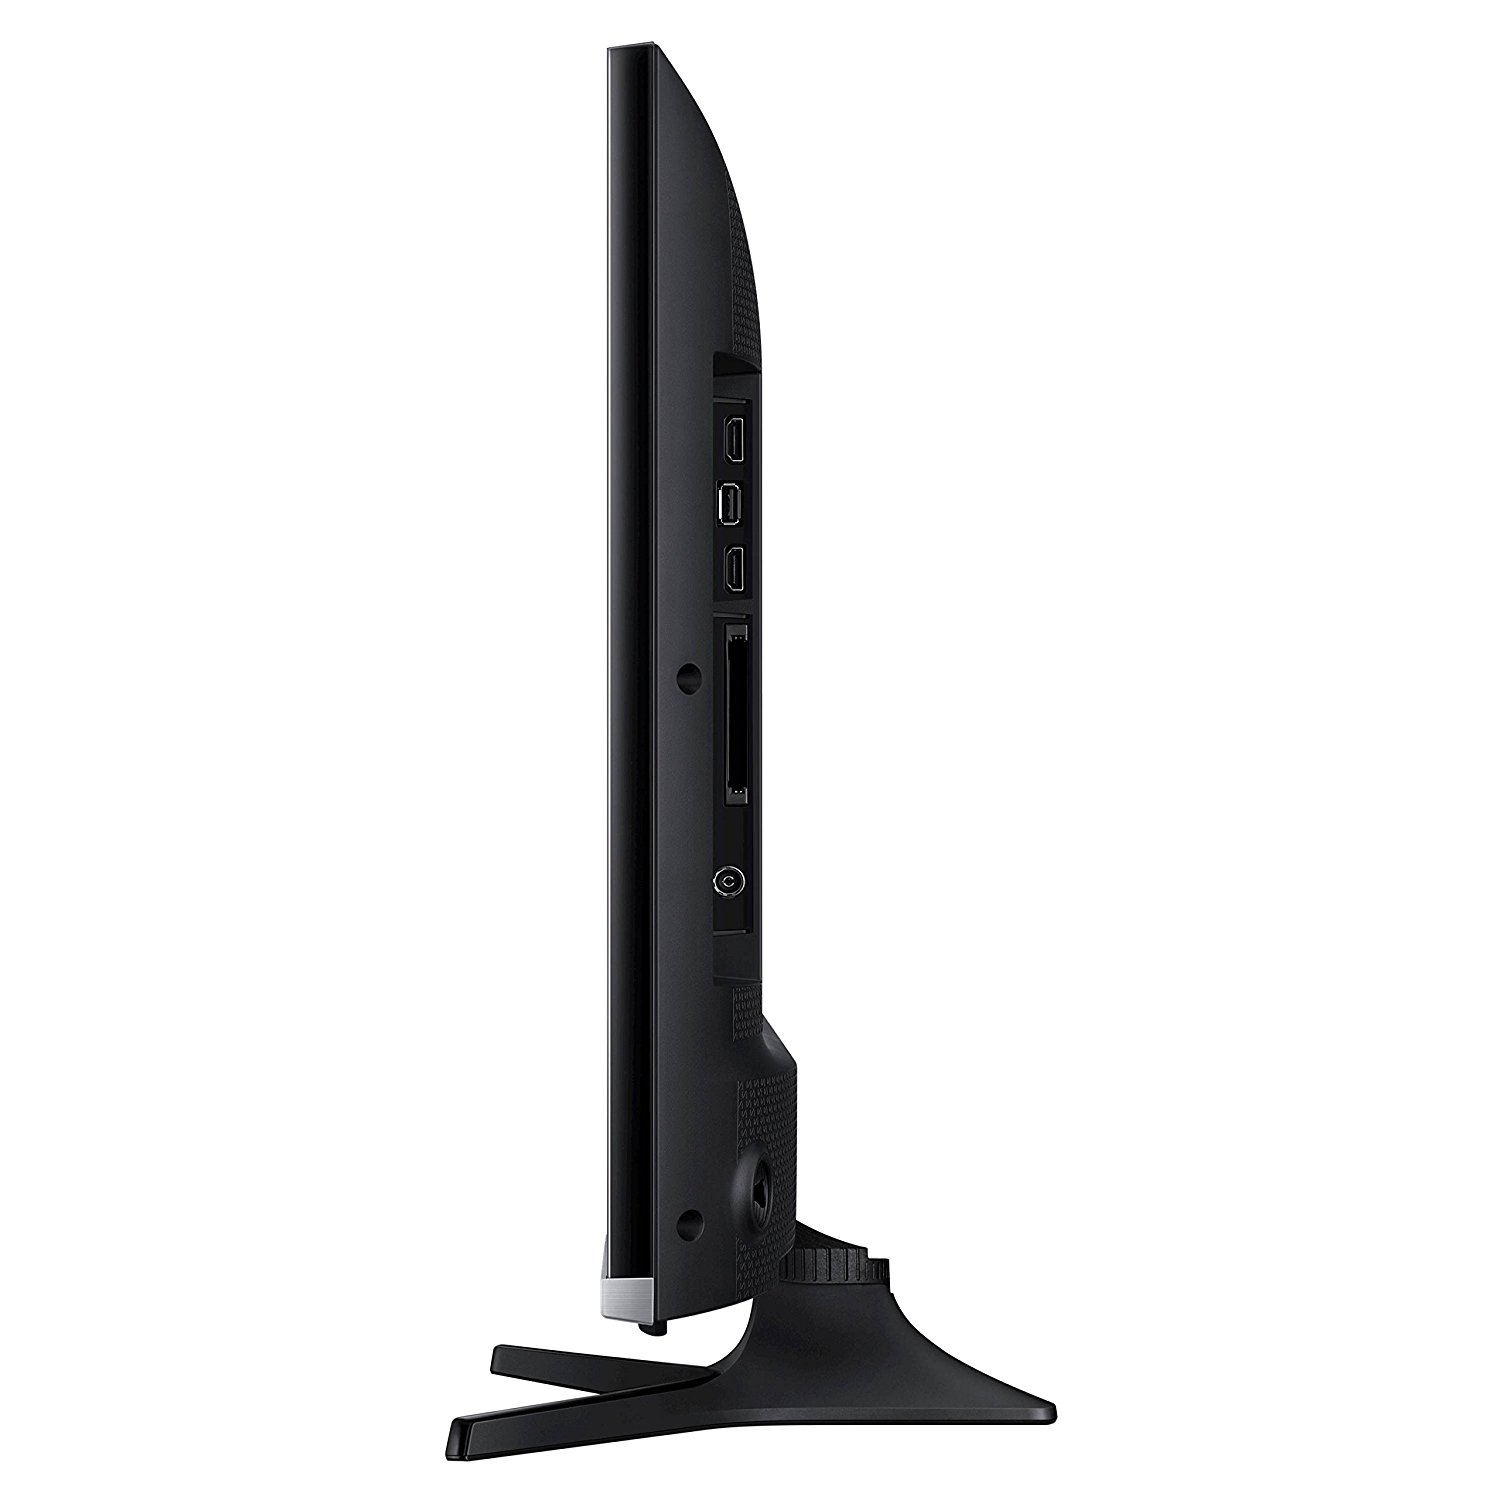 Samsung Un43j5200 43 1080p Smart Led Tv 2015 Model Certified